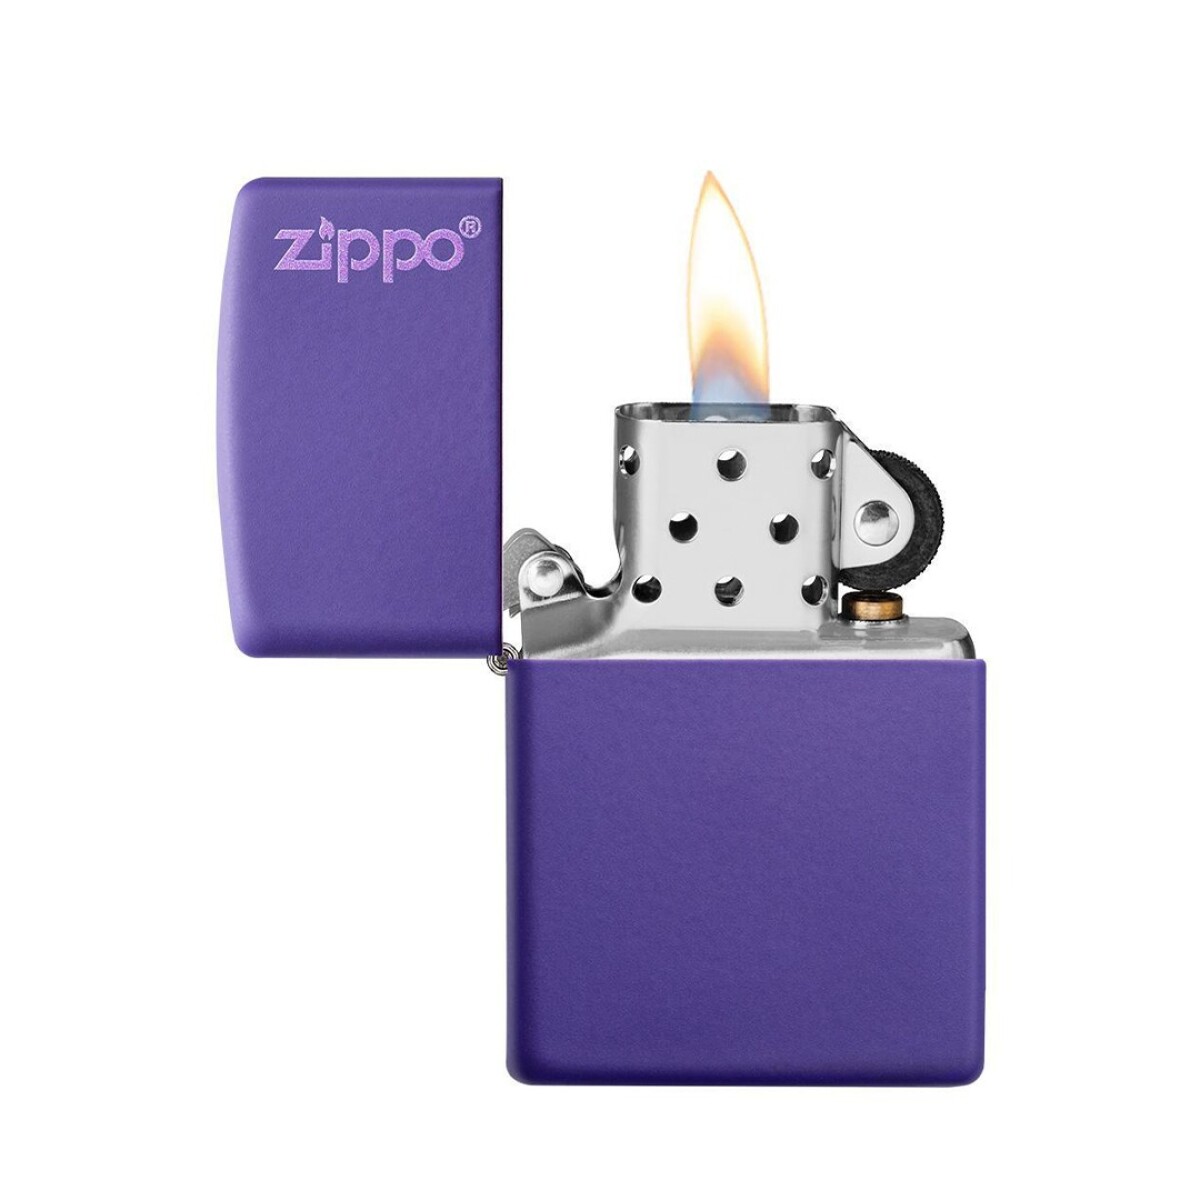 Encendedor Zippo 237 Reg Purple Matte - 001 